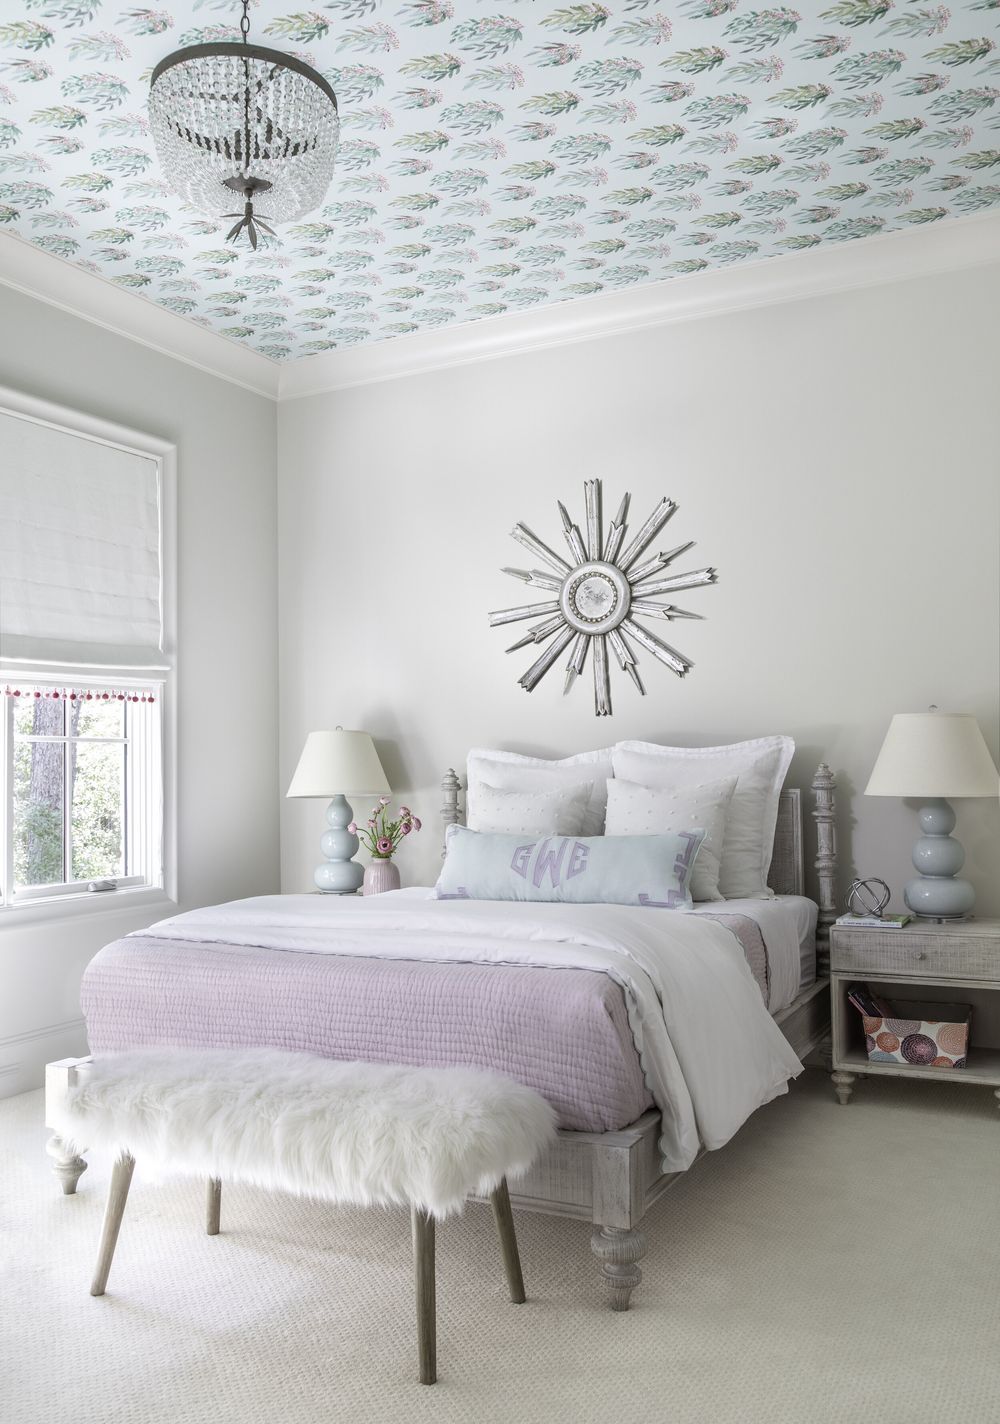 Girls bedroom decor ideas Lavender via Becki Griffin Curious Details